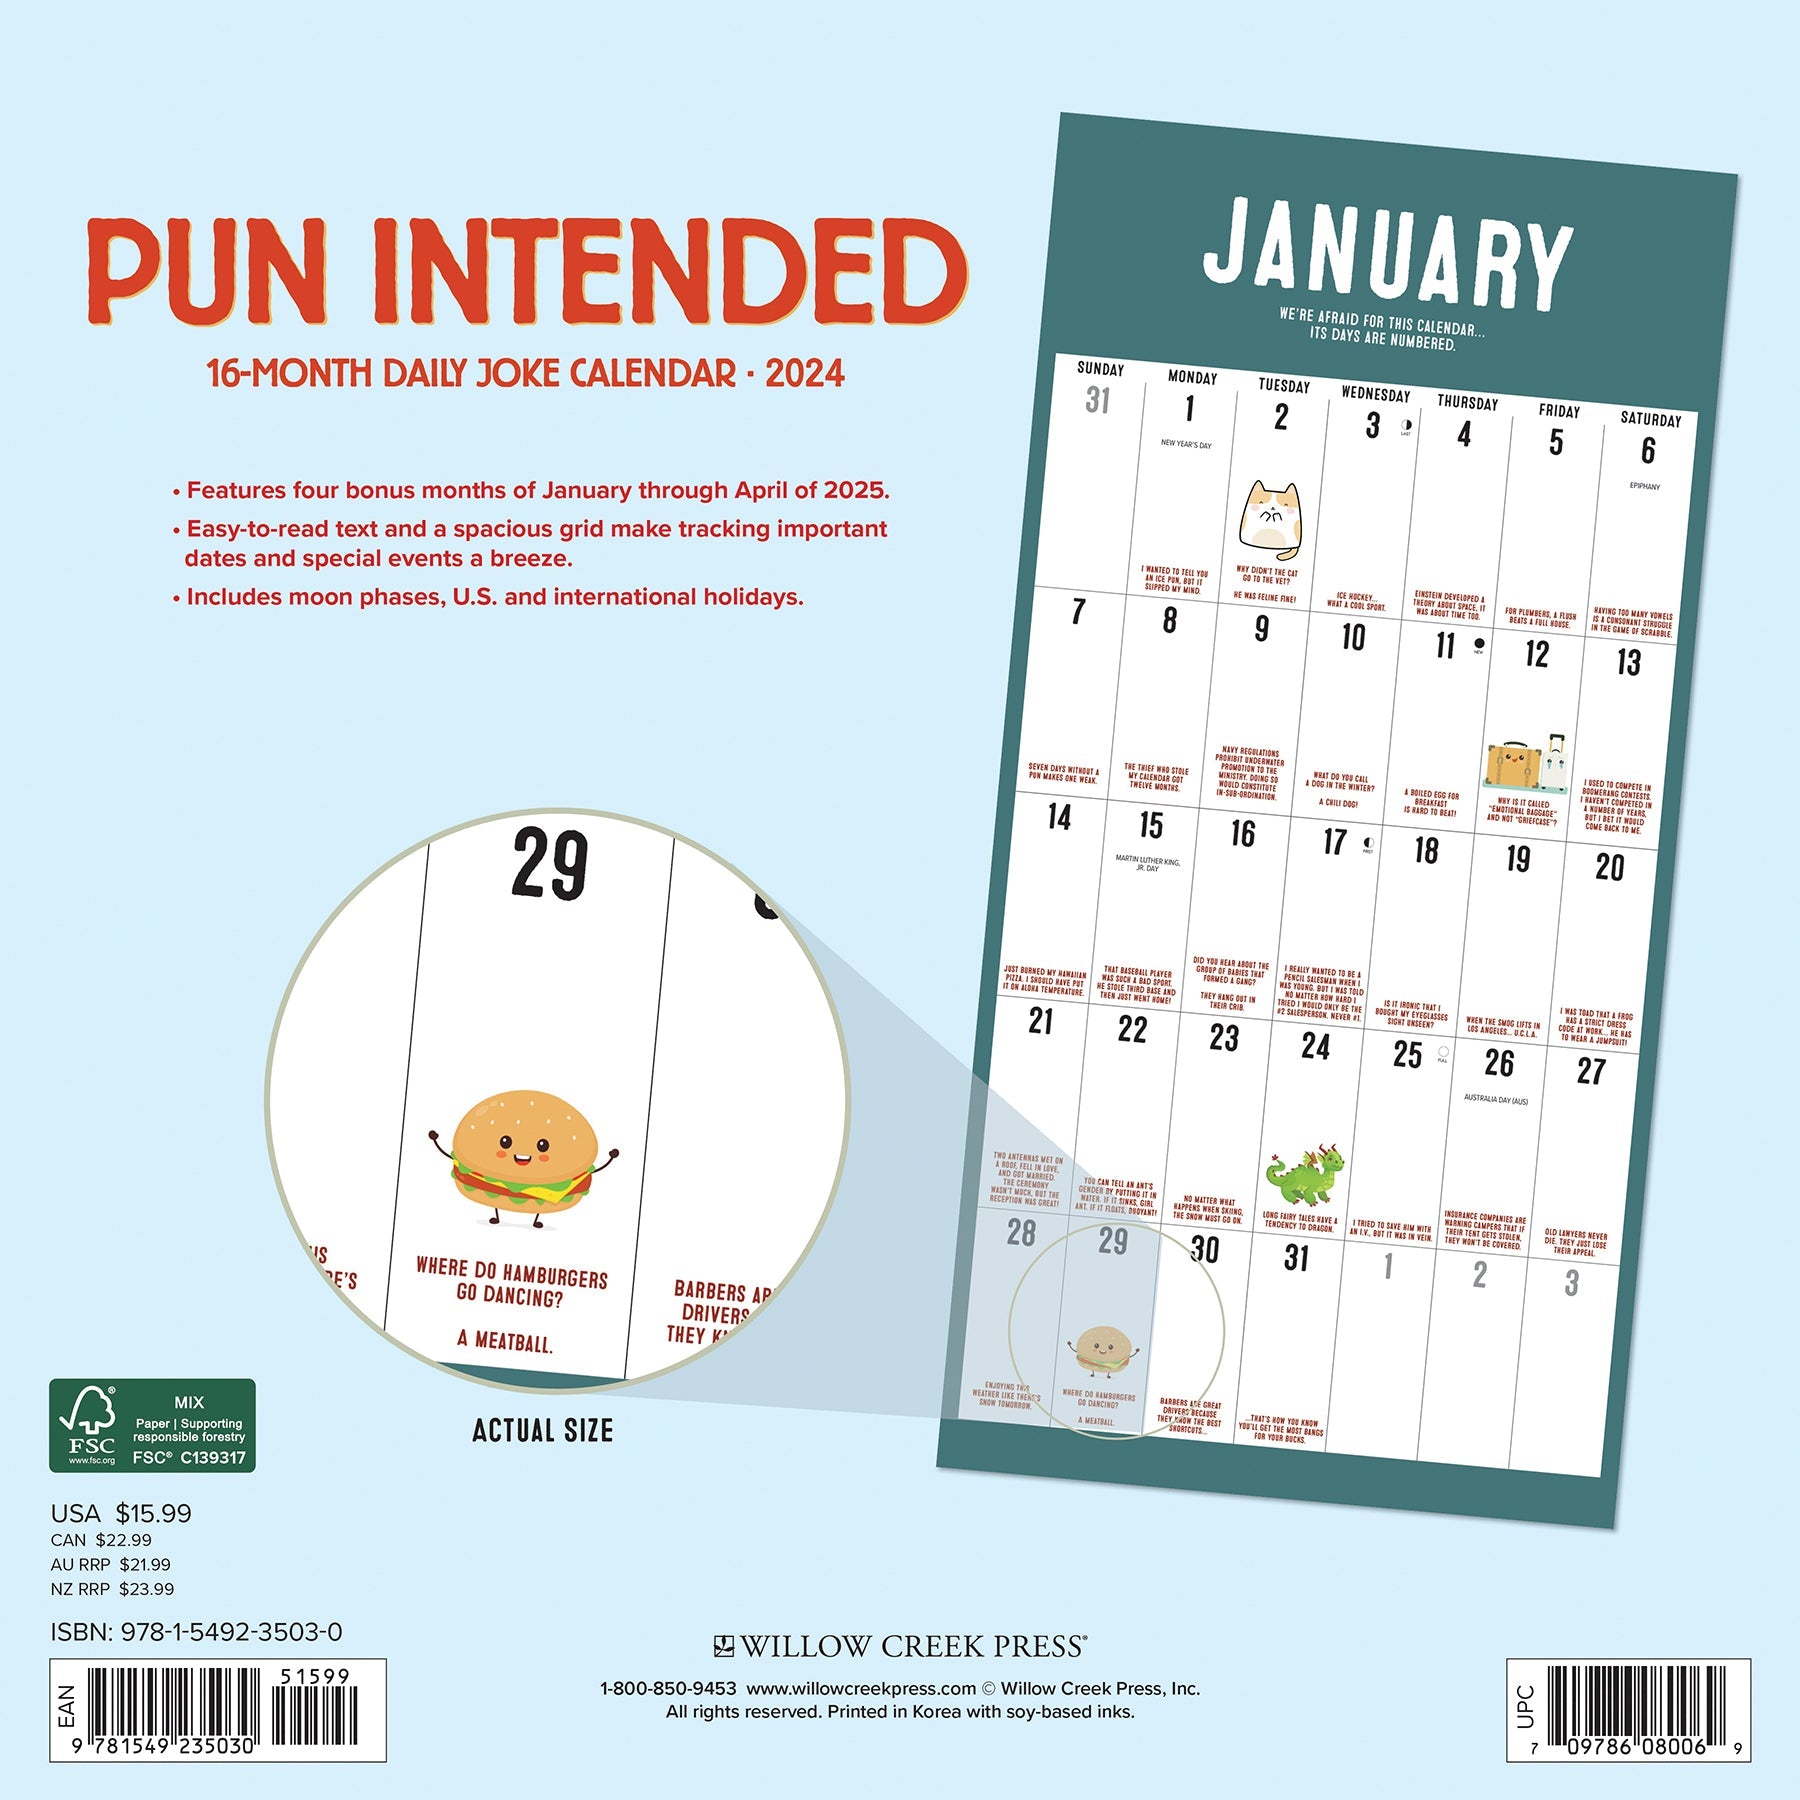 2024 Pun Intended Square Wall Calendar Fun & Humor Calendars by